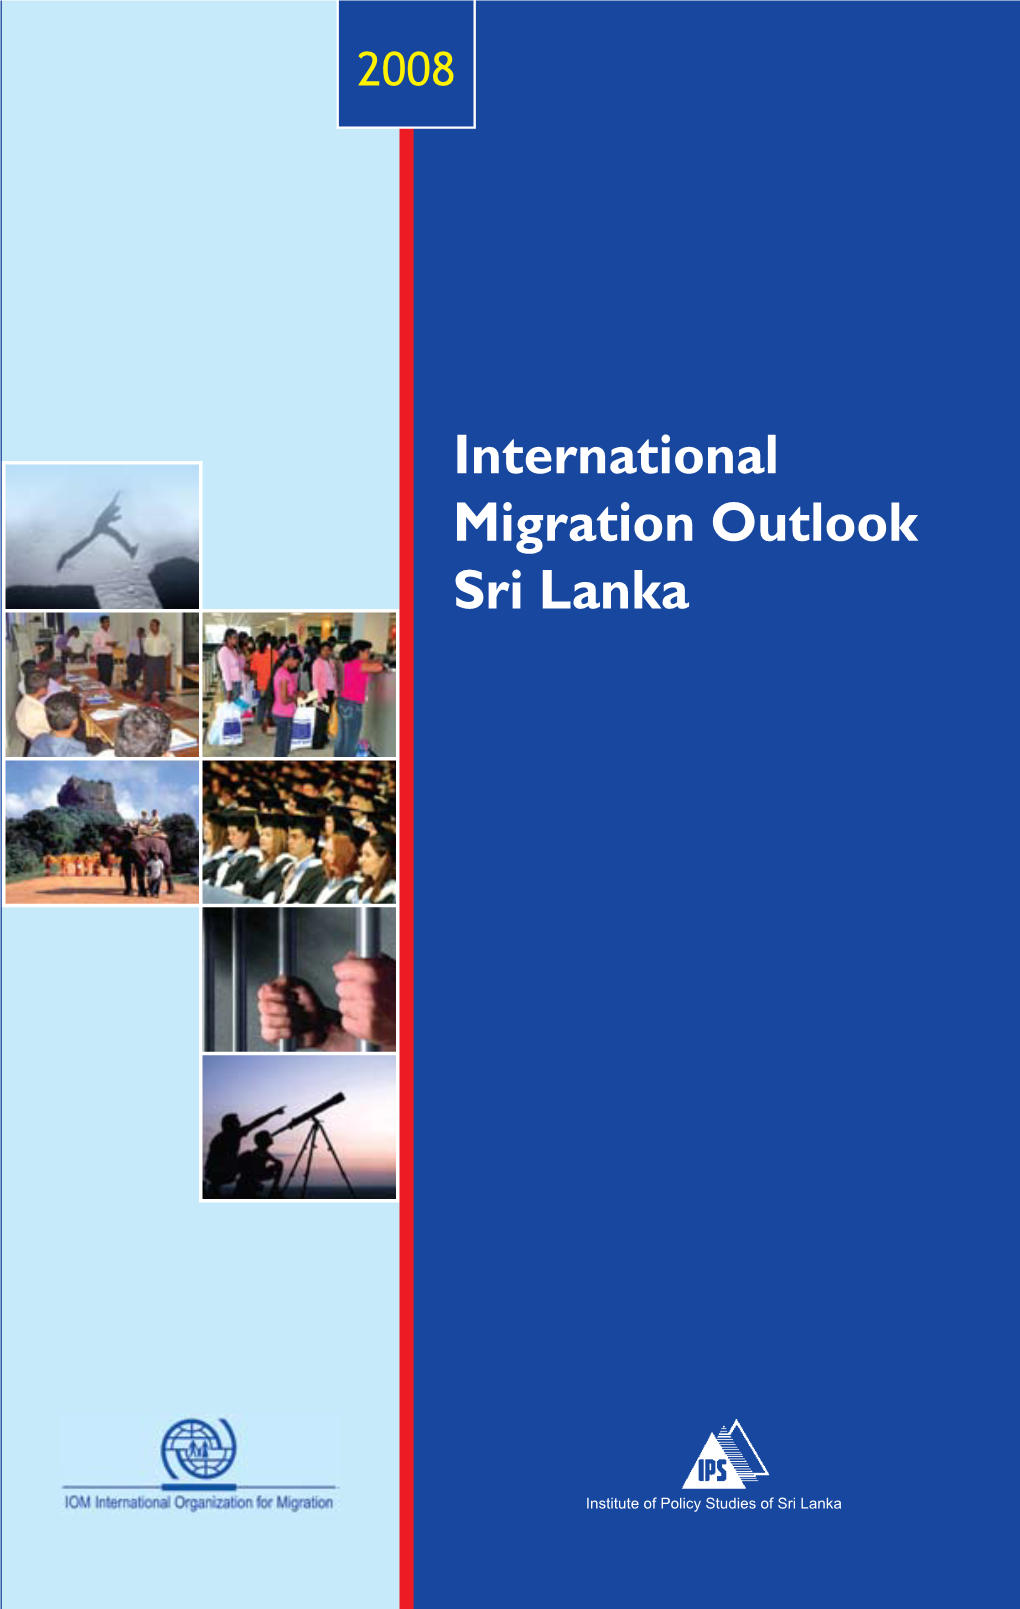 International Migration Outlook – Sri Lanka 2008